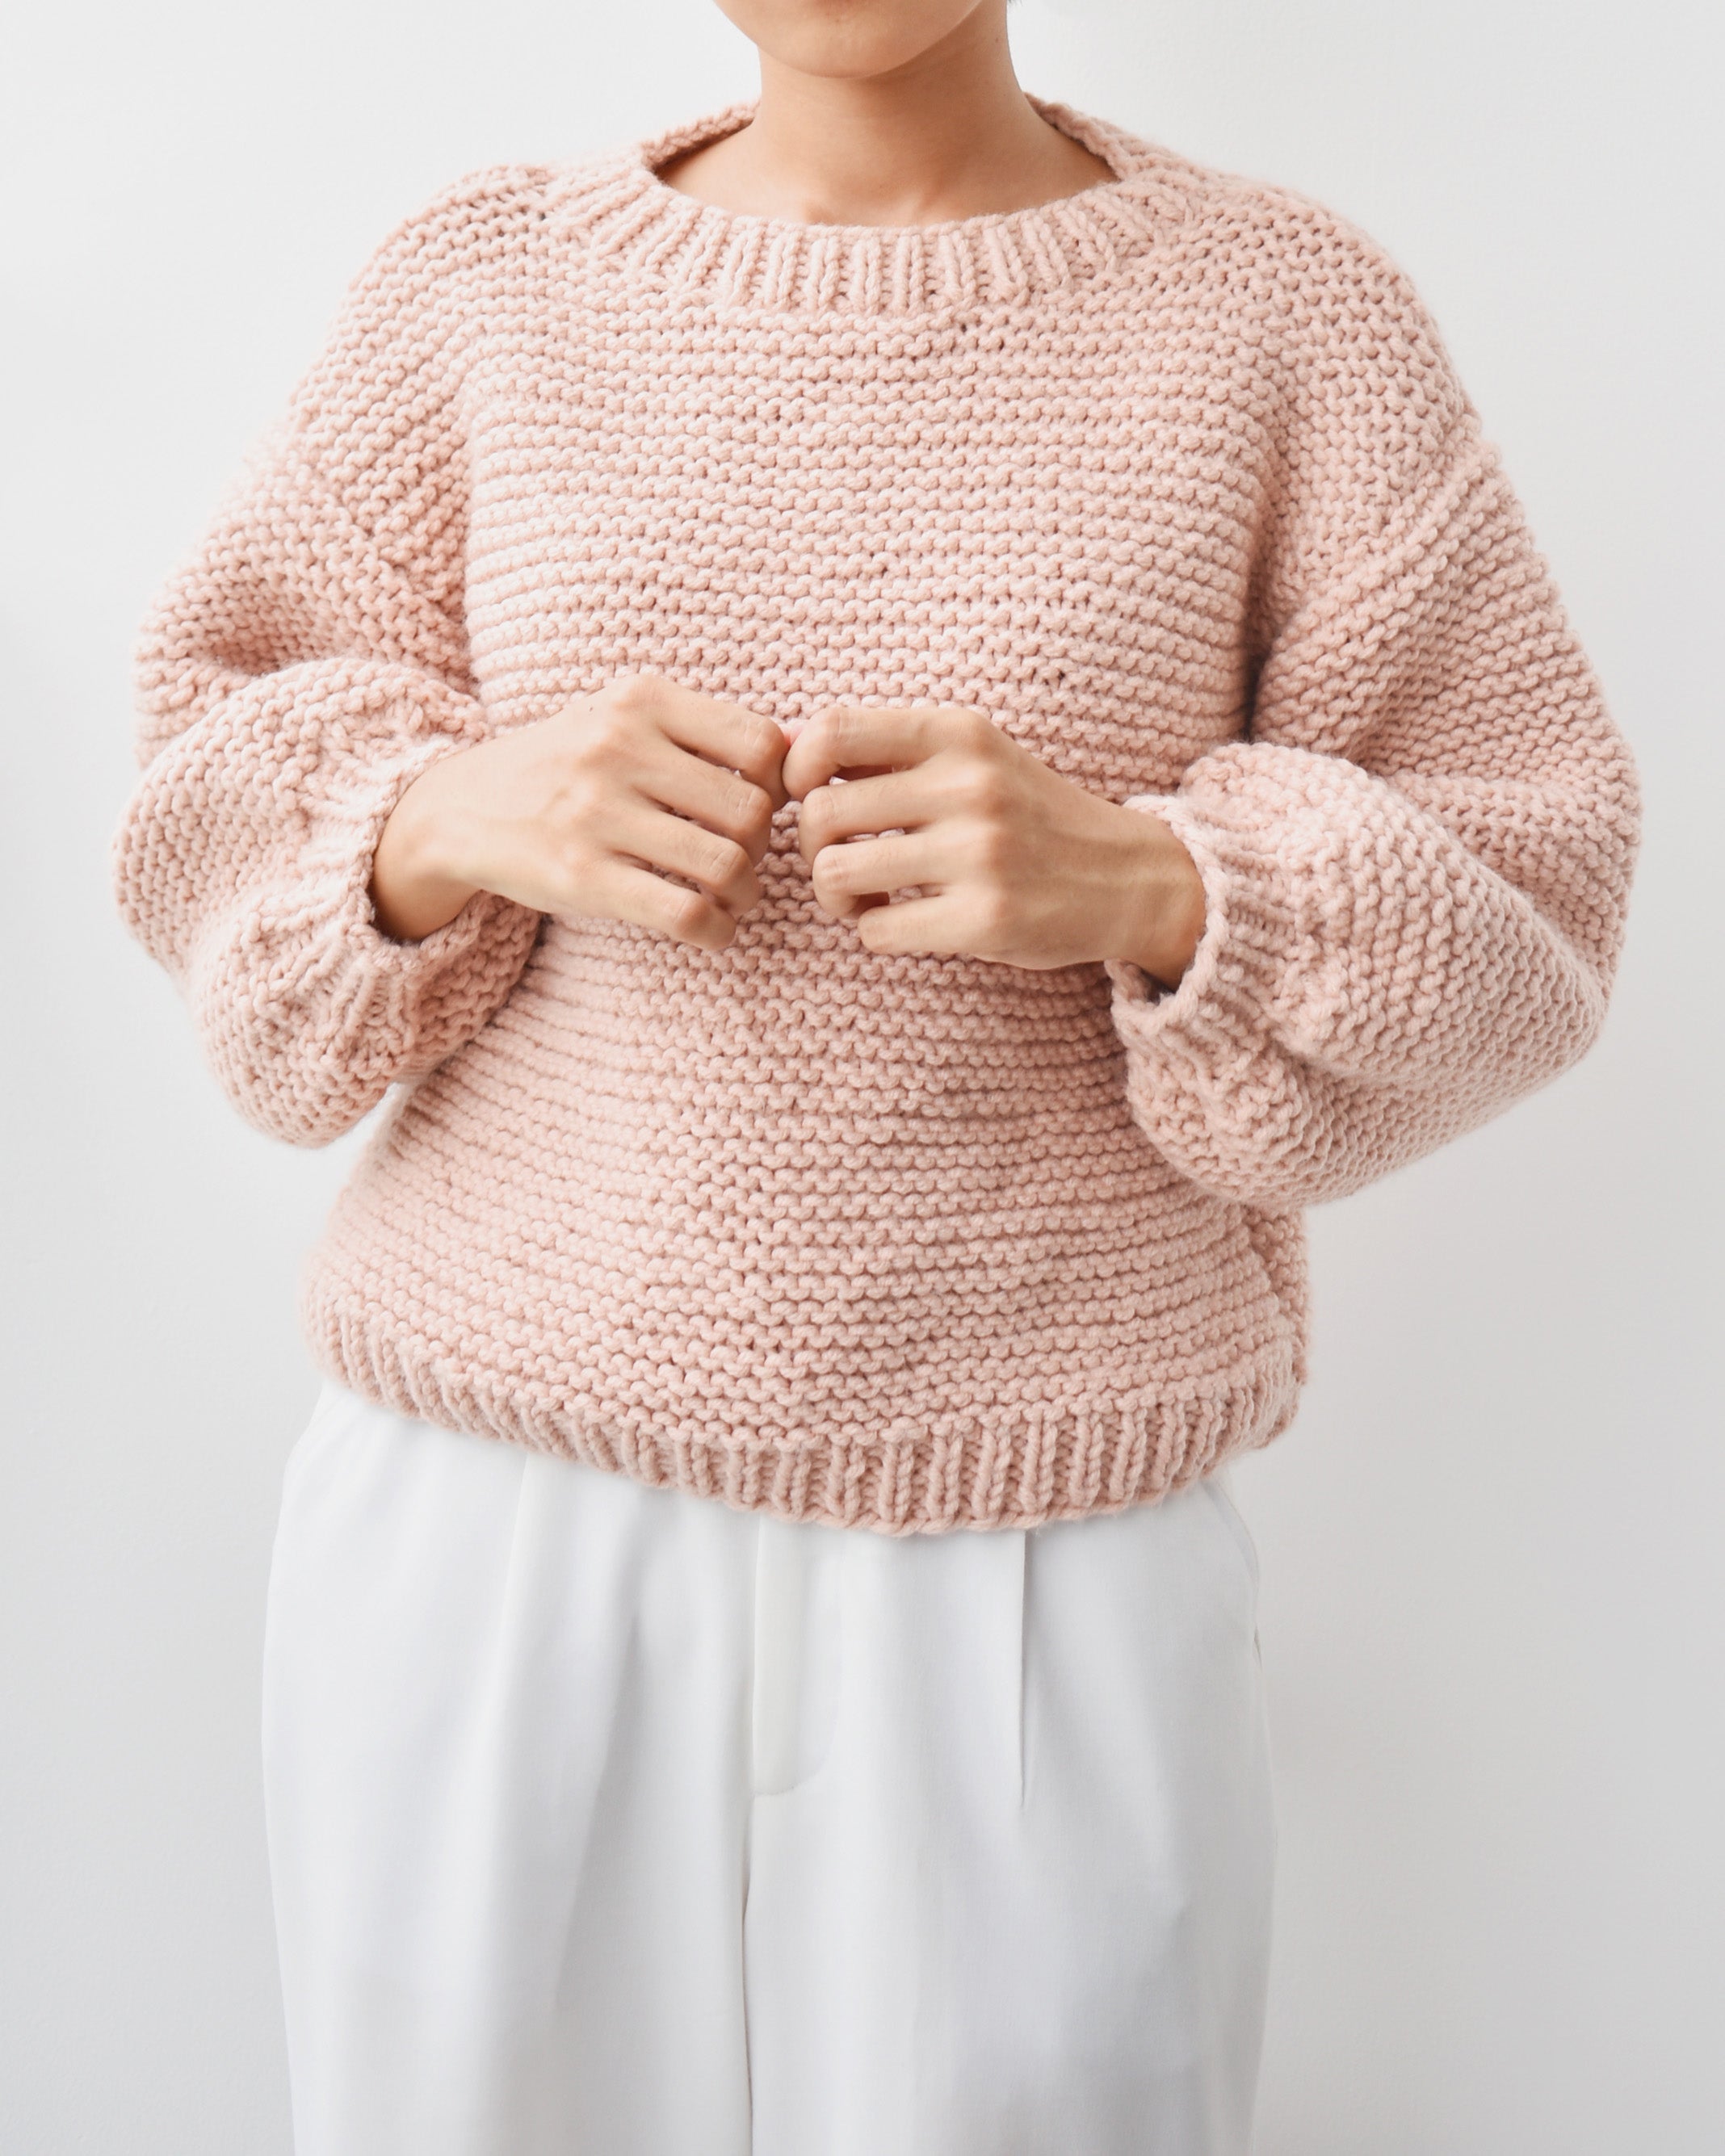 Sweater No.3 | Beginner knitting pattern – Daisy & Peace